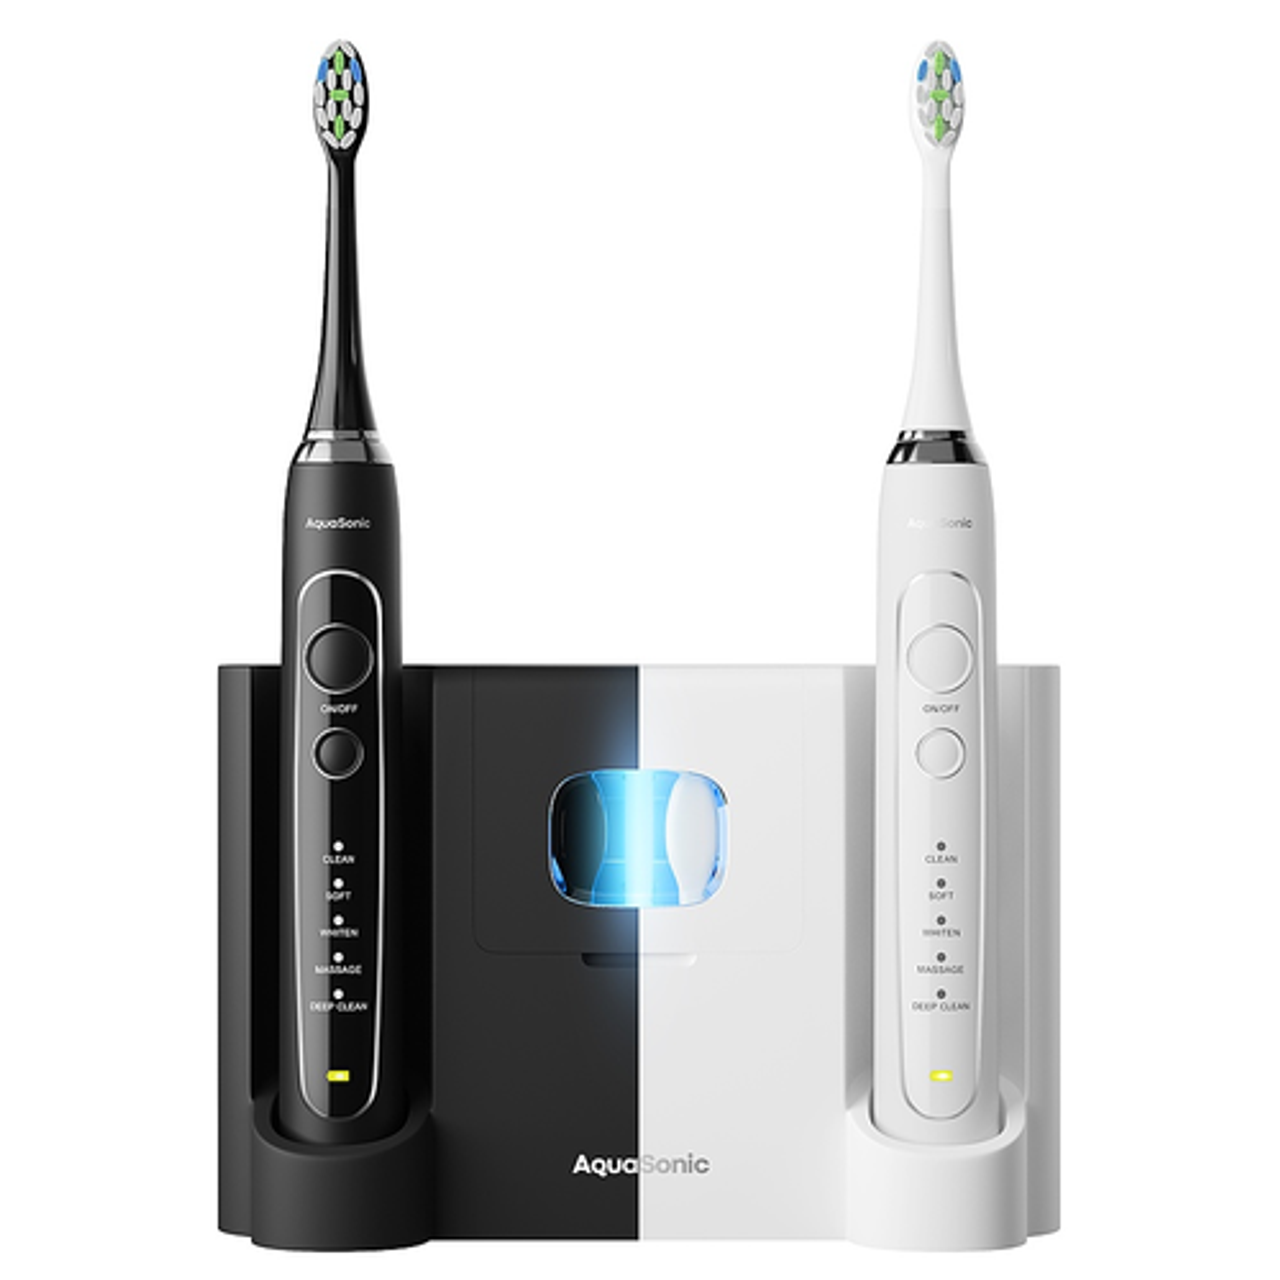 AquaSonic Elite Duo Series Electric Toothbrush Set - White and Black